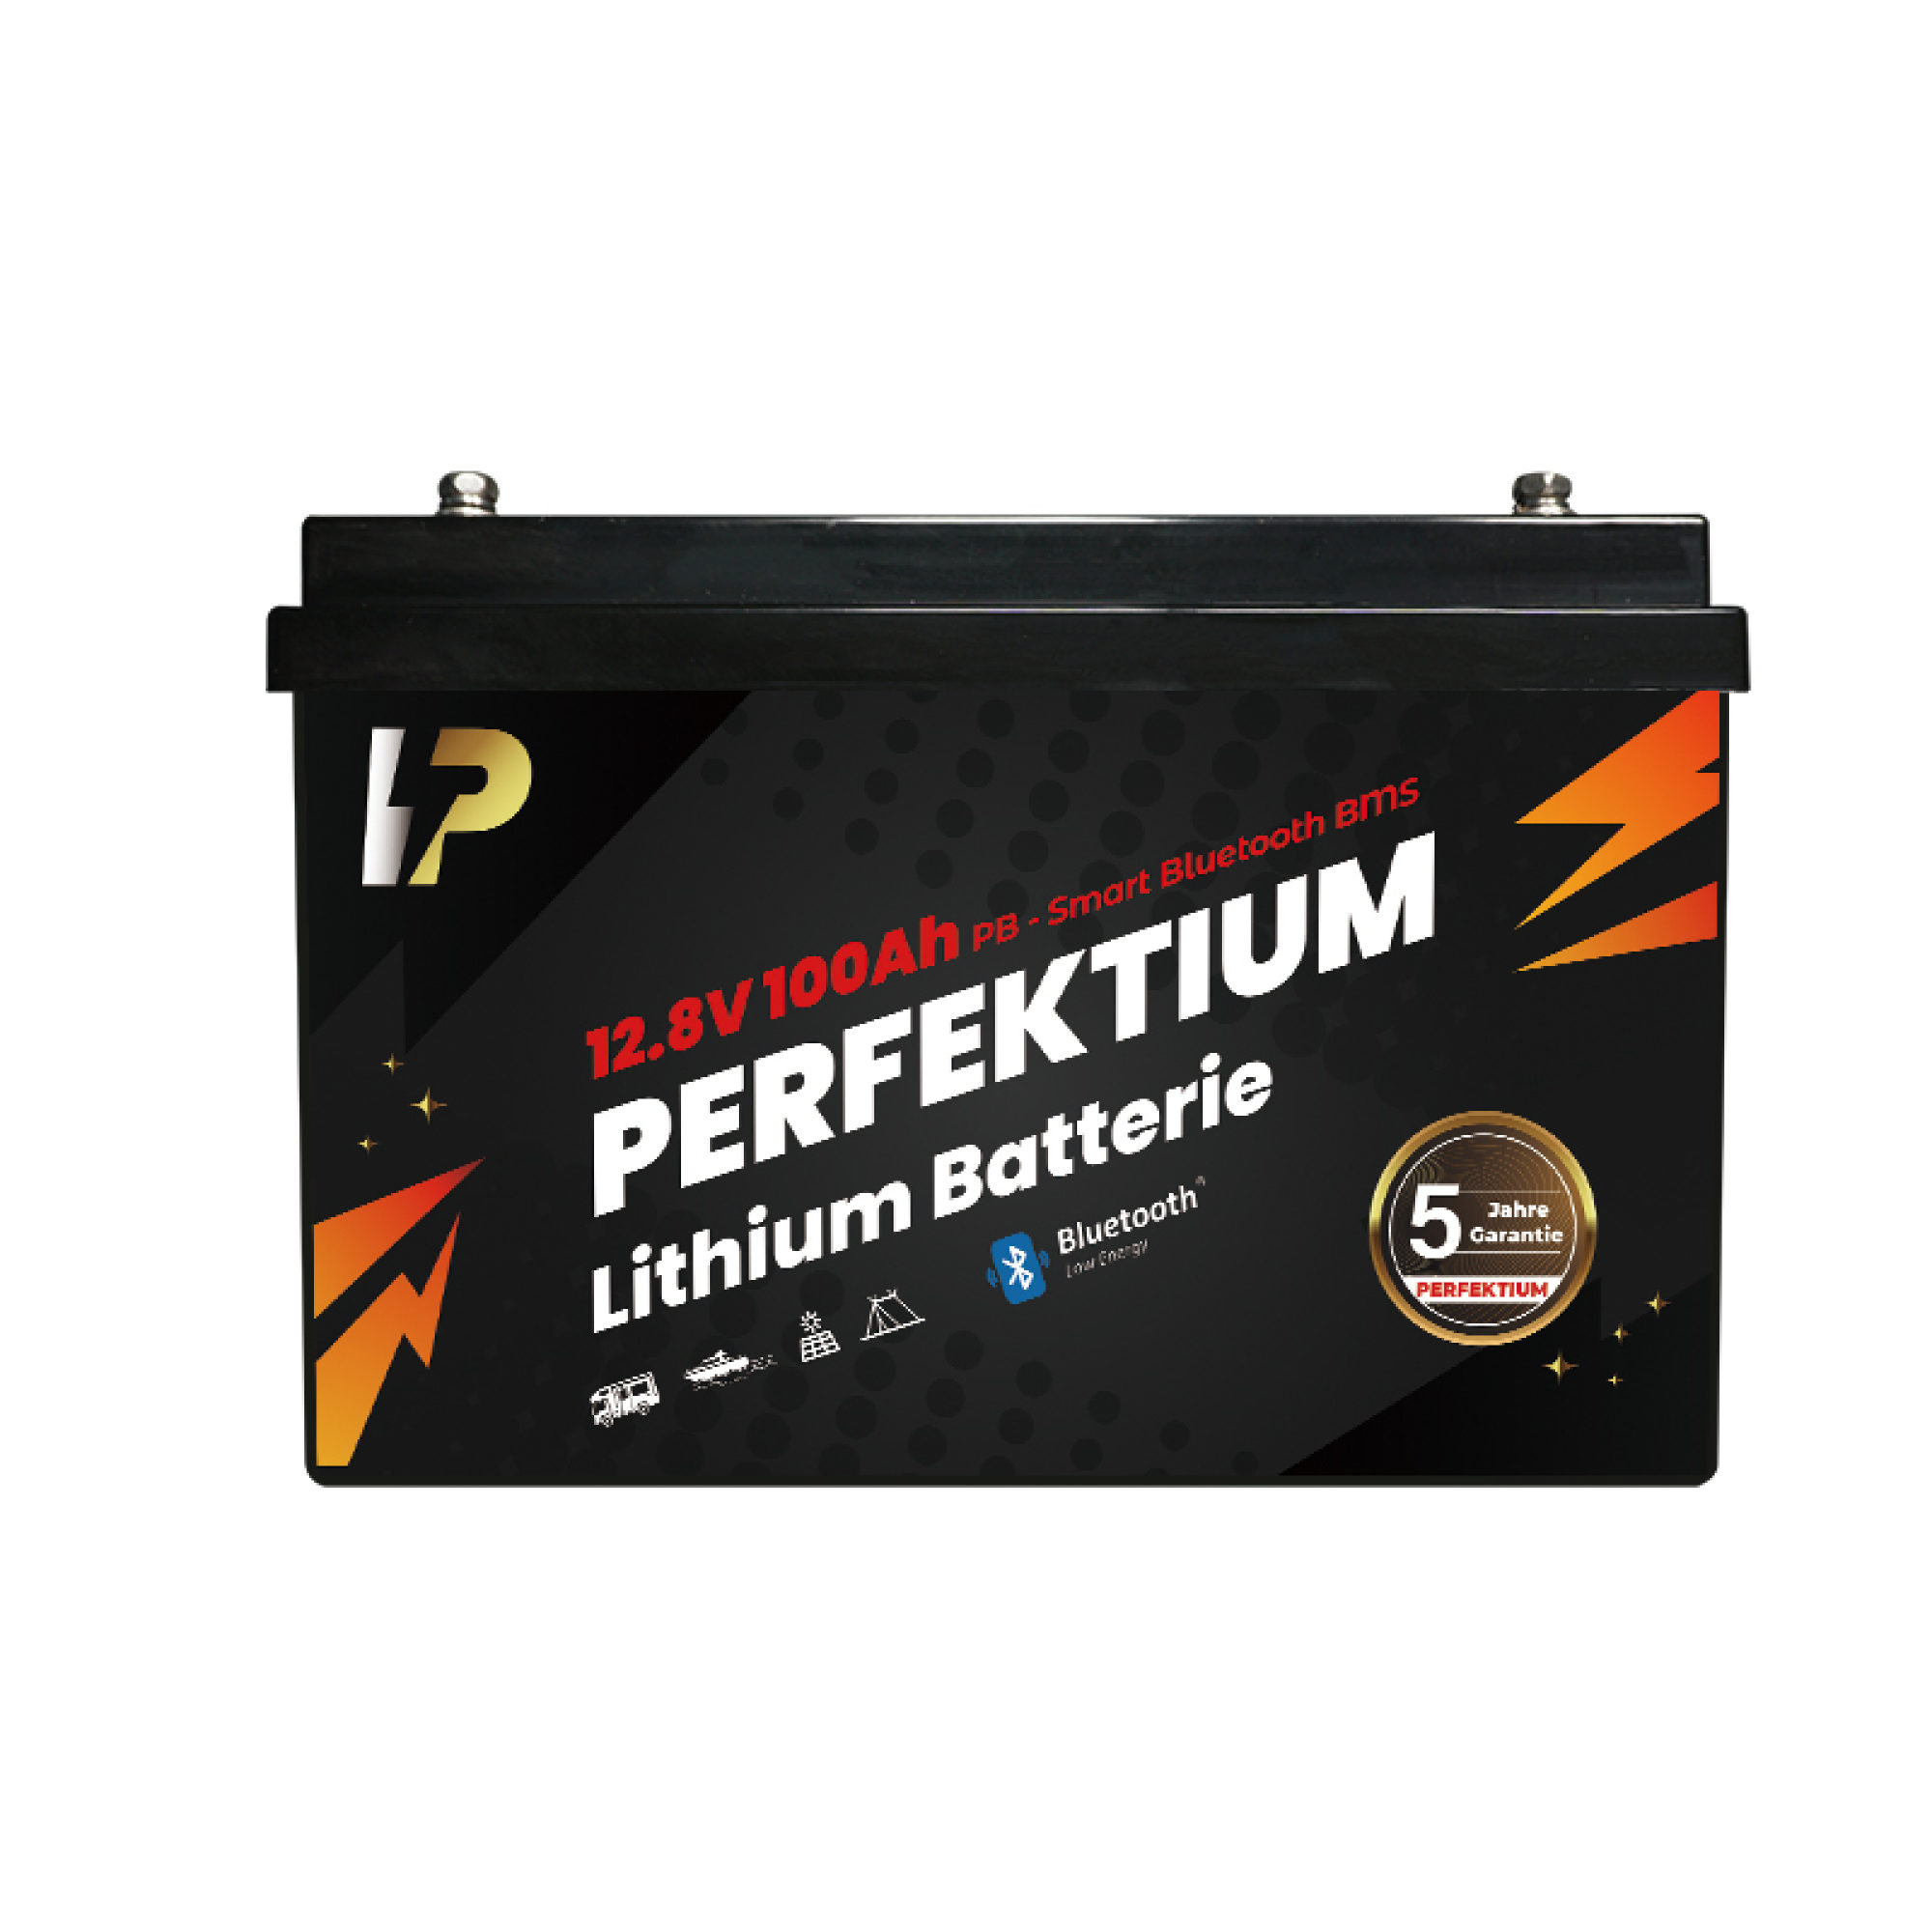 Perfektium LiFePO4 PB-12.8V 100Ah – Lithium Batterie Smart BMS mit Bluetooth – 5 Jahre Garantie